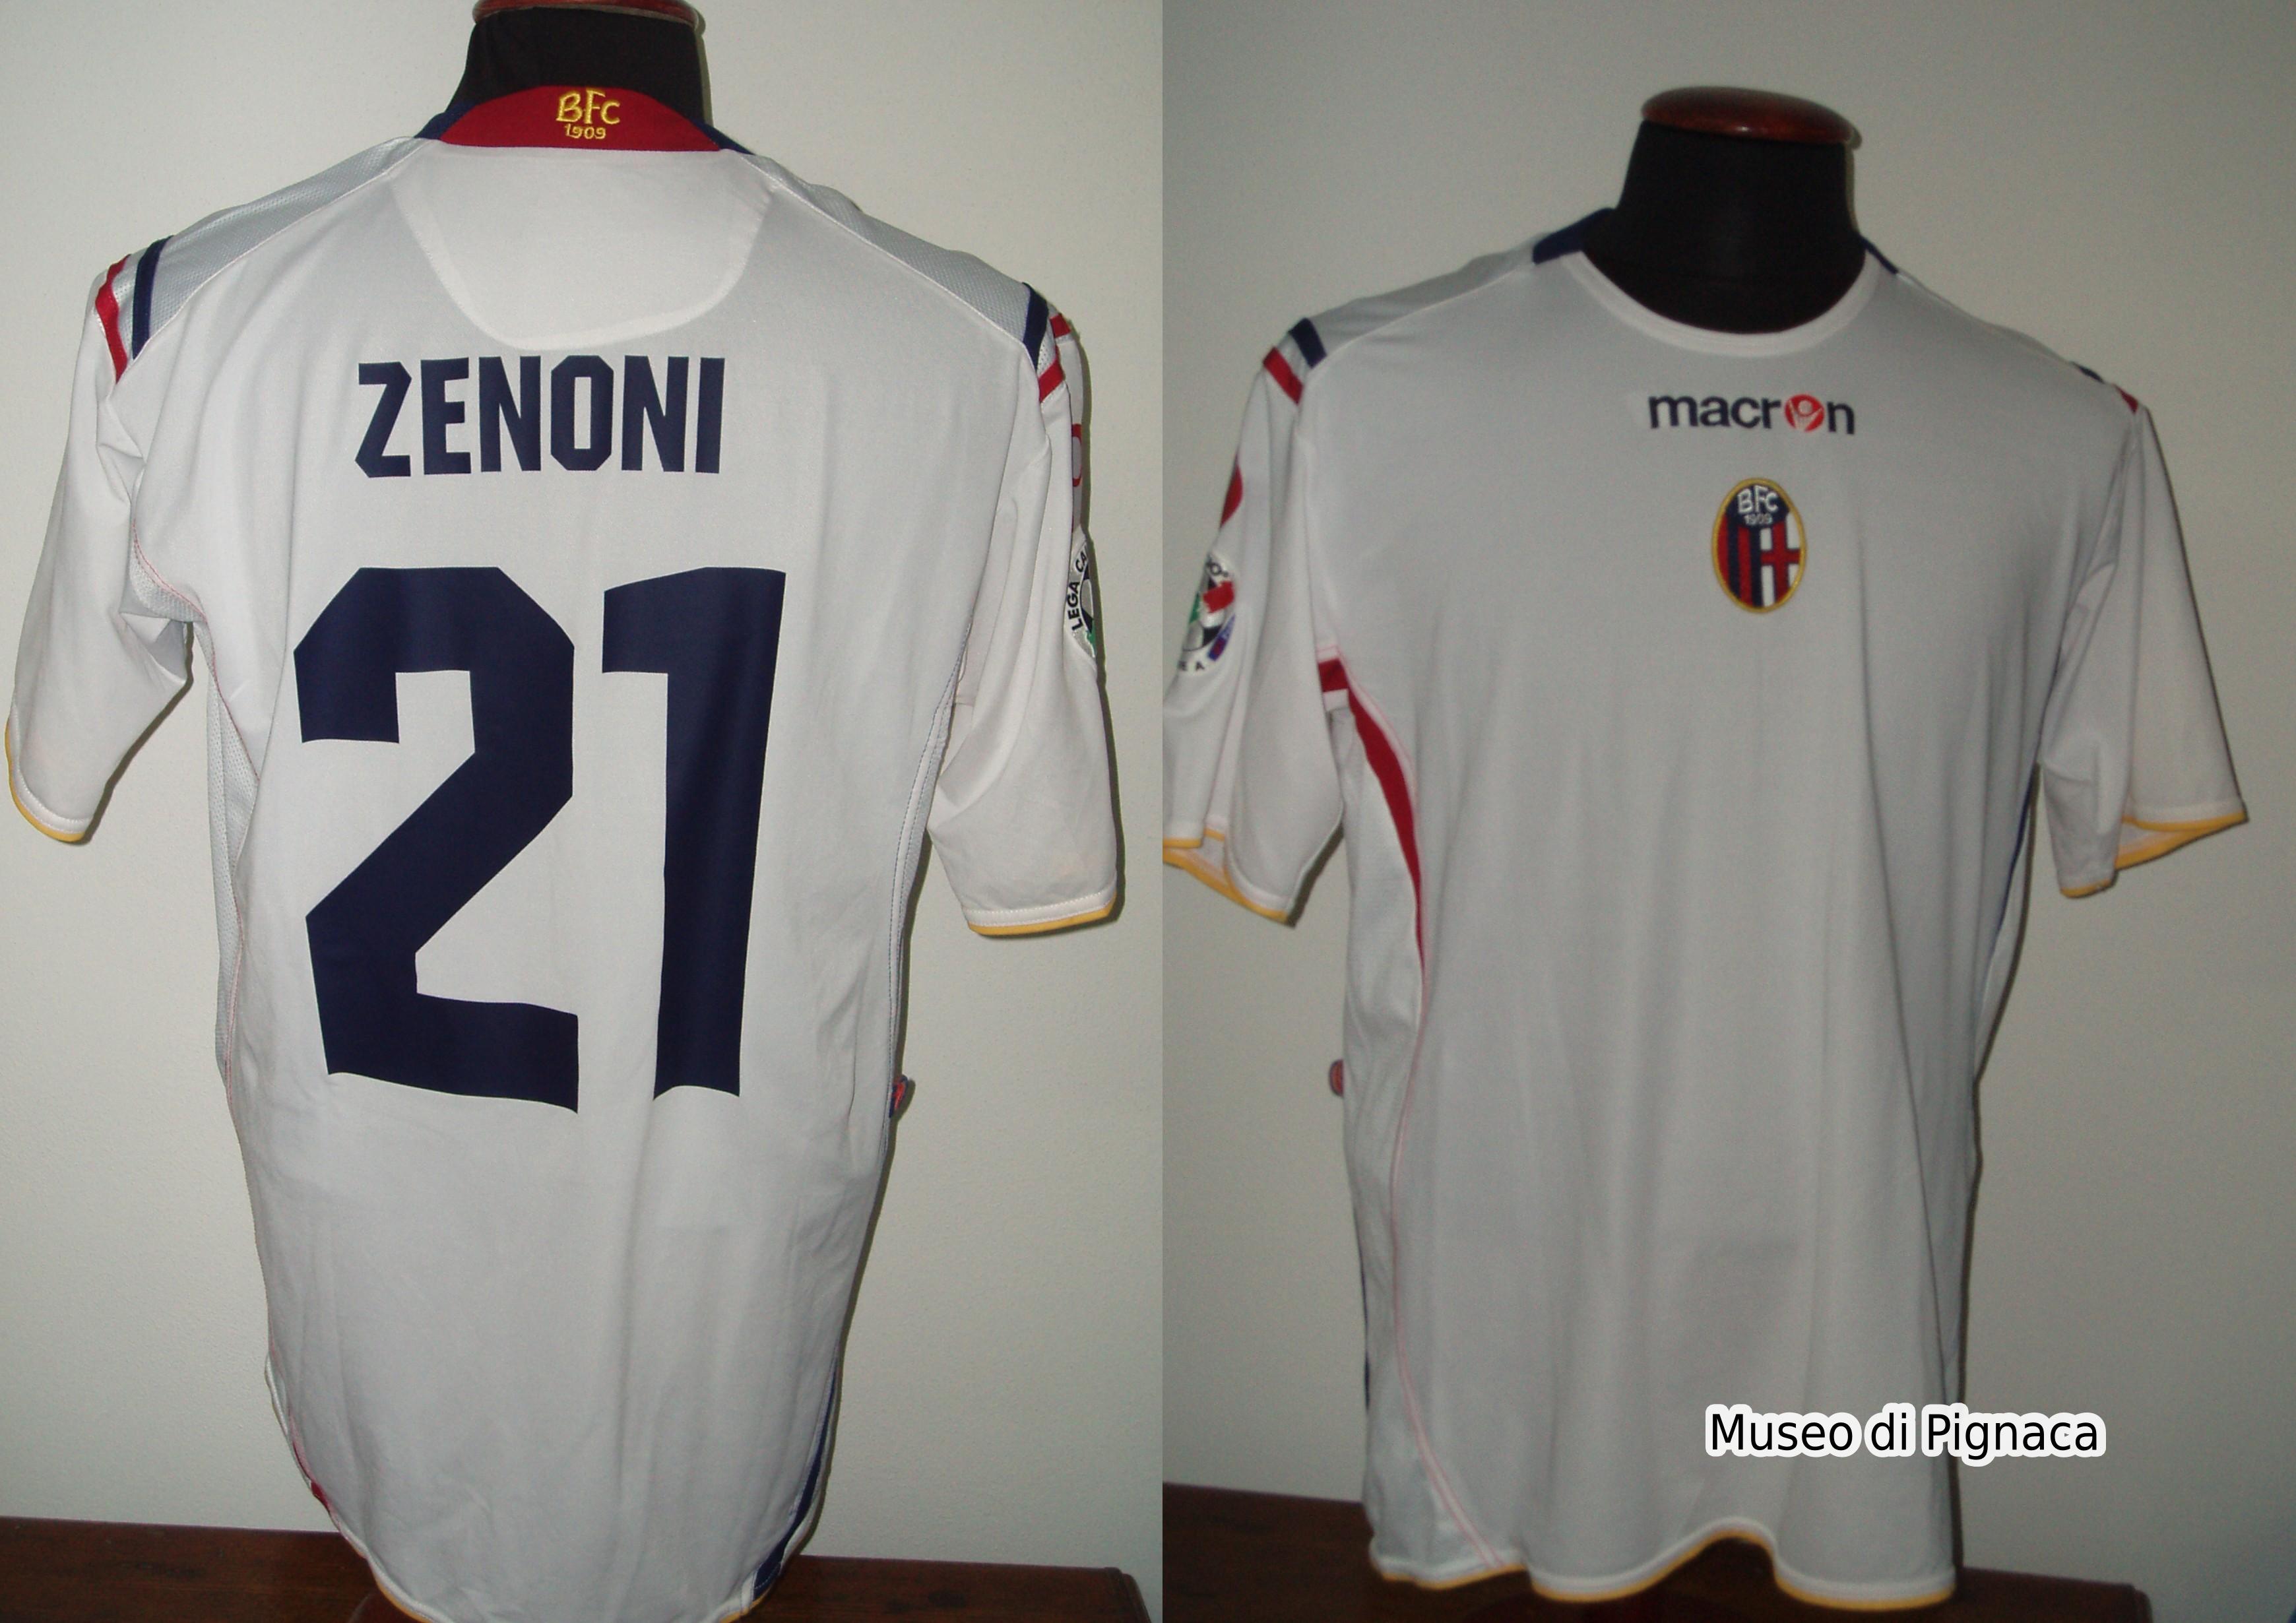 Cristian Zenoni - 2008-09 Maglia senza sponsor indossata a San Siro vs il Milan